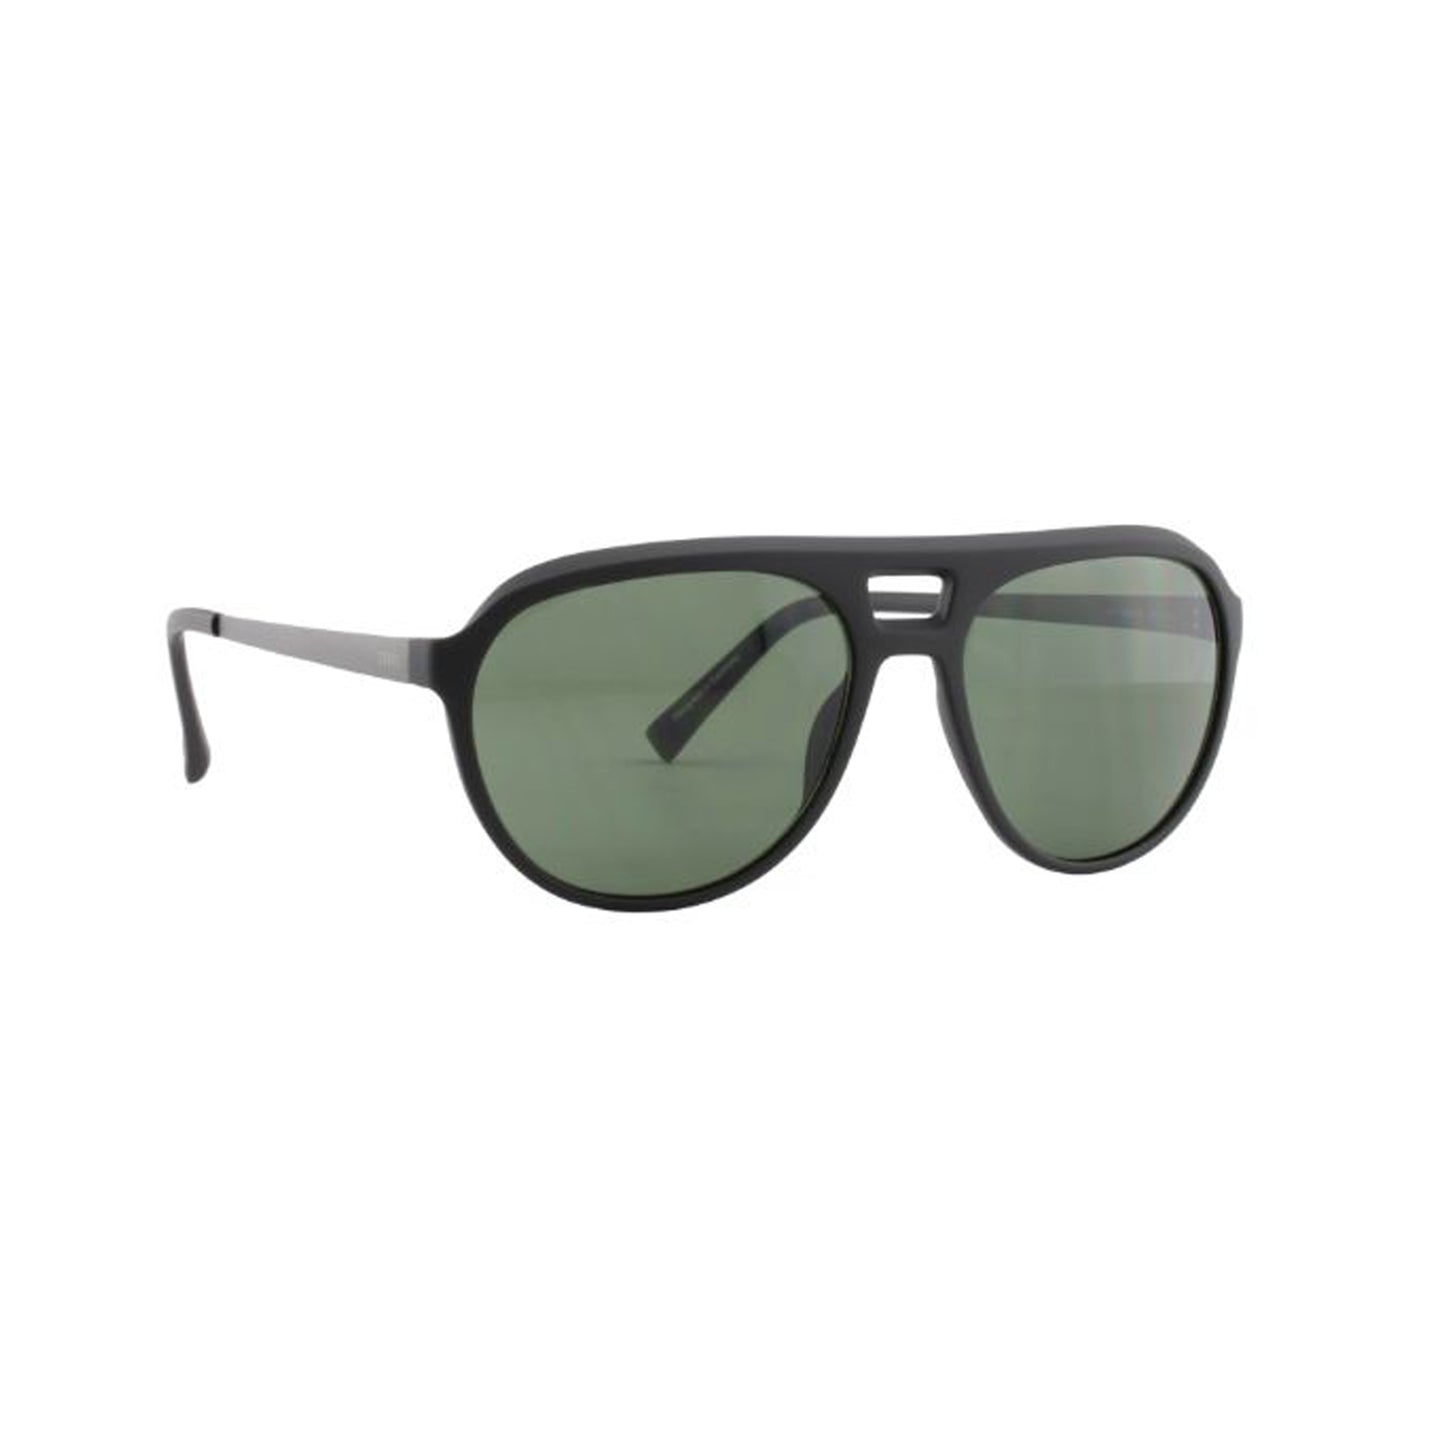 Zeiss Eyewear Black Aviator Acetate Full Rim Sunglasses. Made in Germany ZS92007-Y22-F920